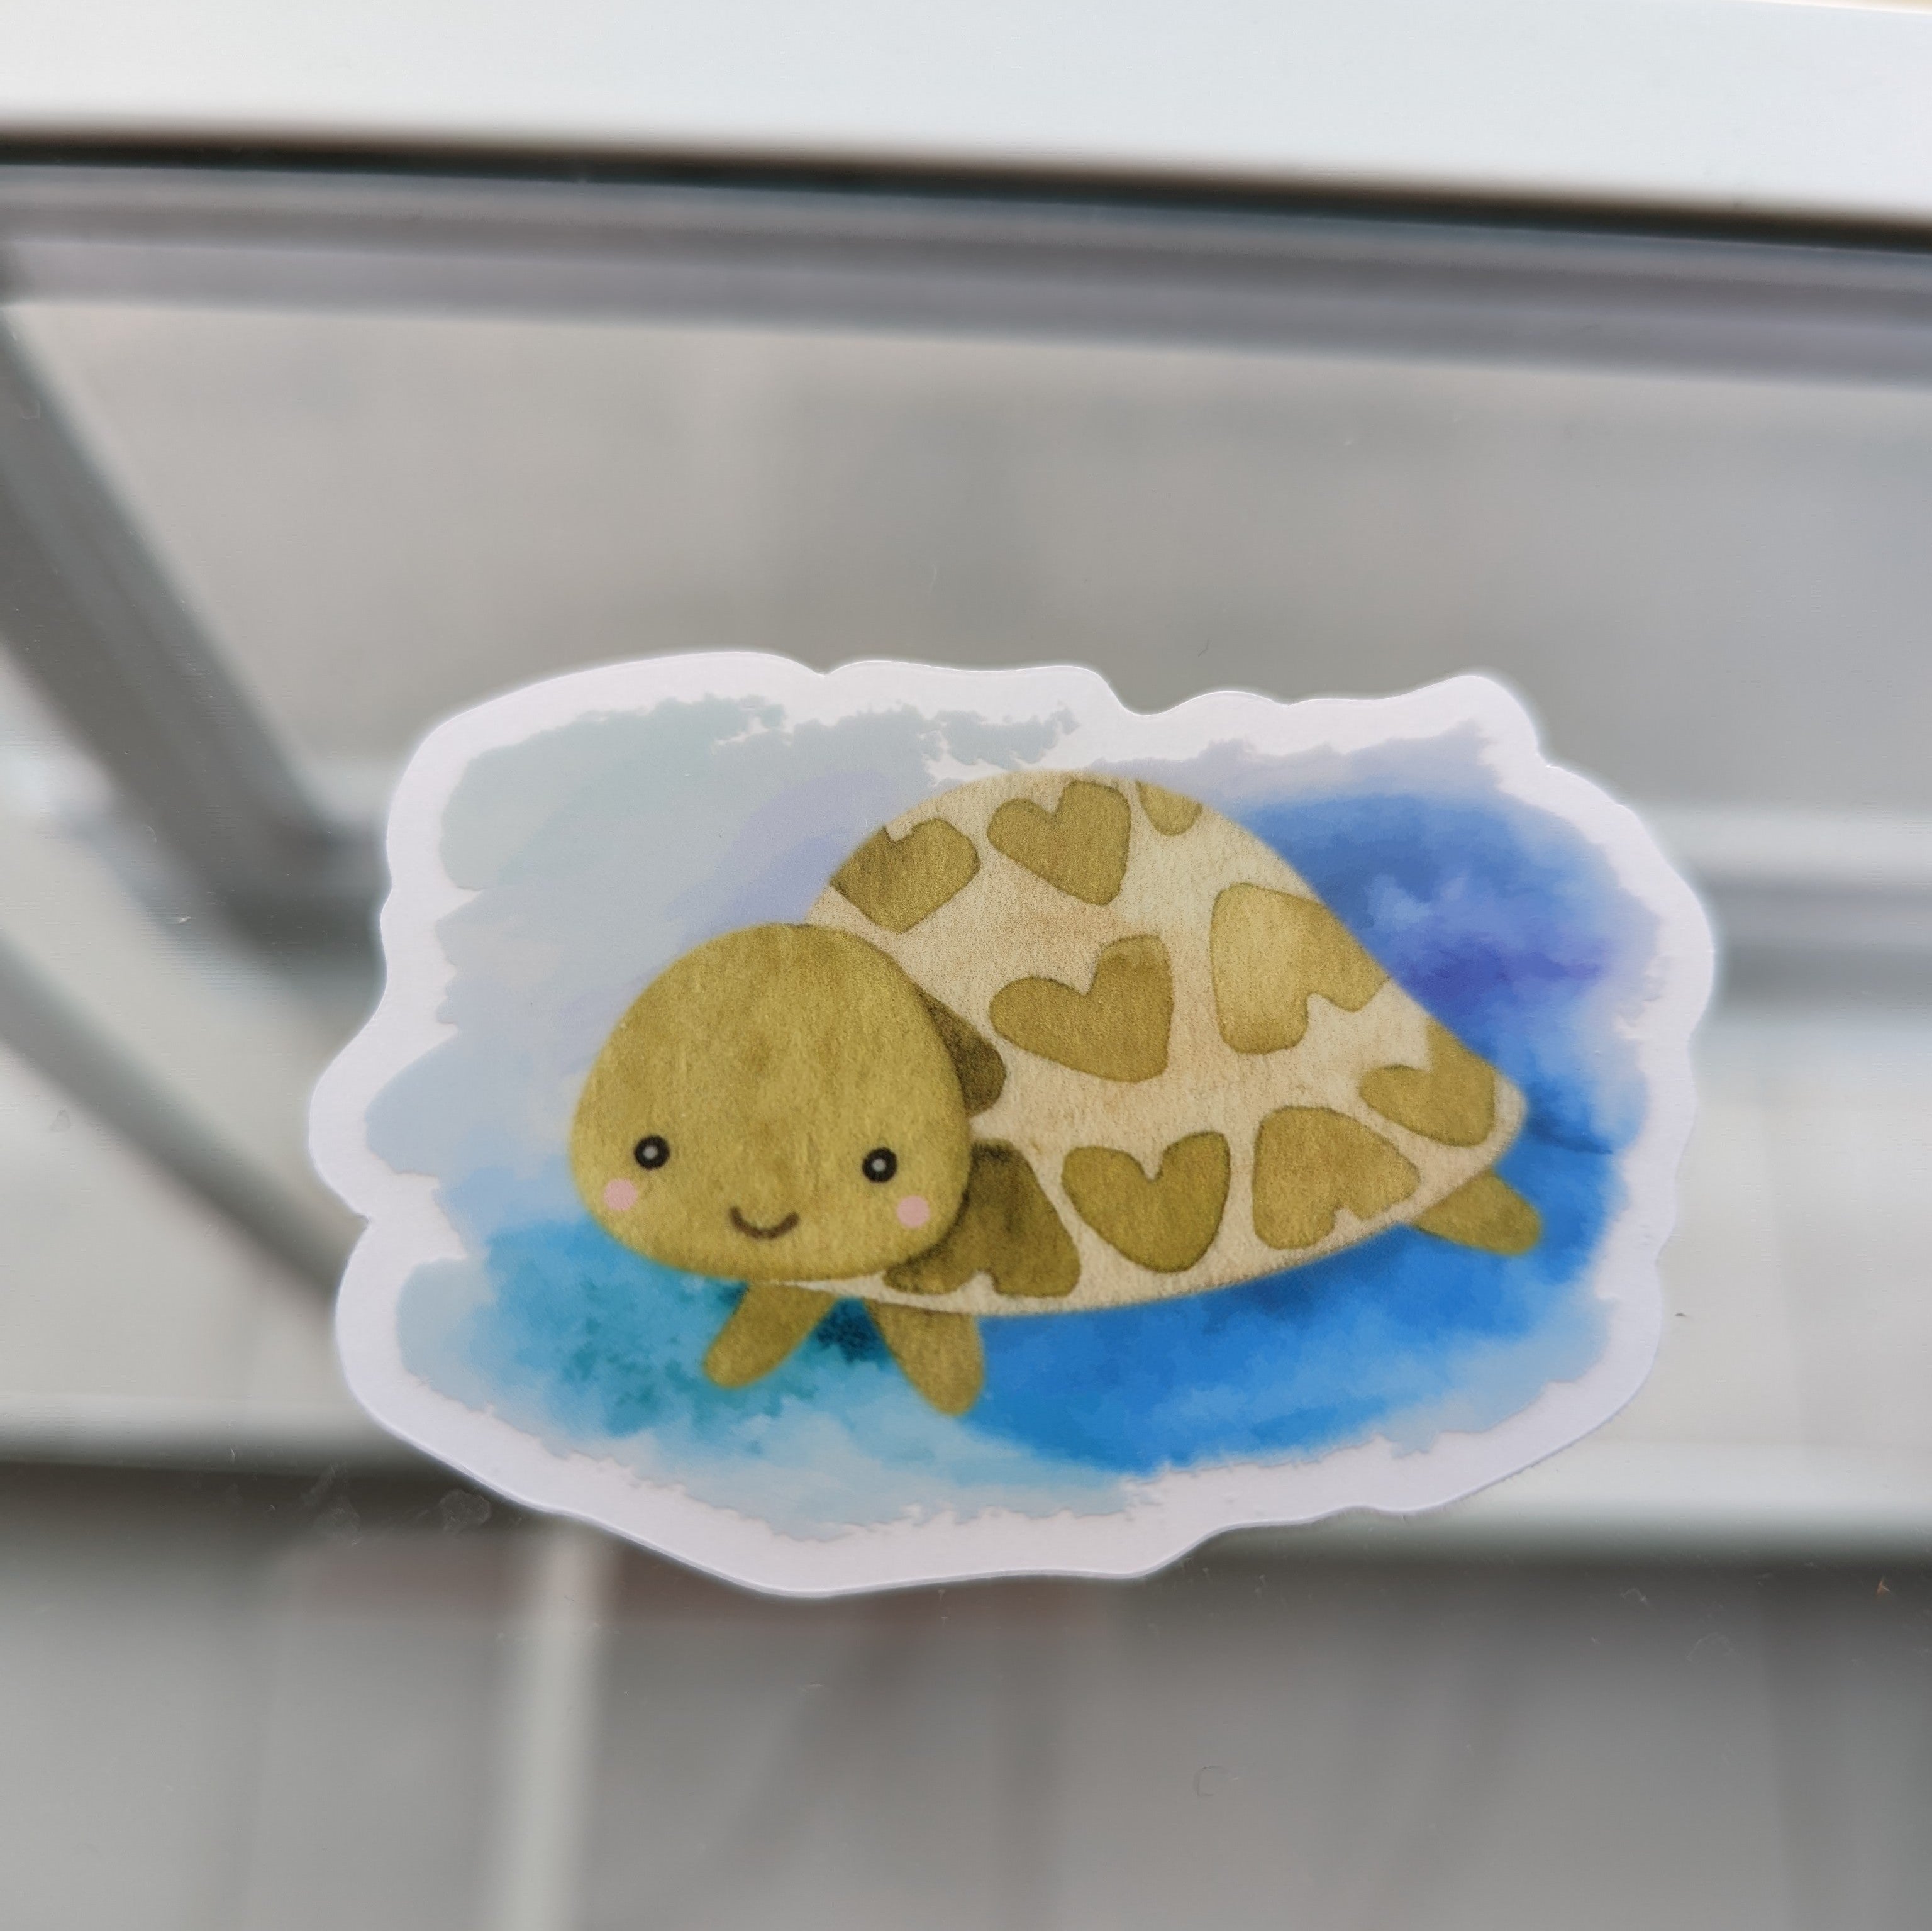 Clear Dishwasher-Safe Sticker (Turtle)